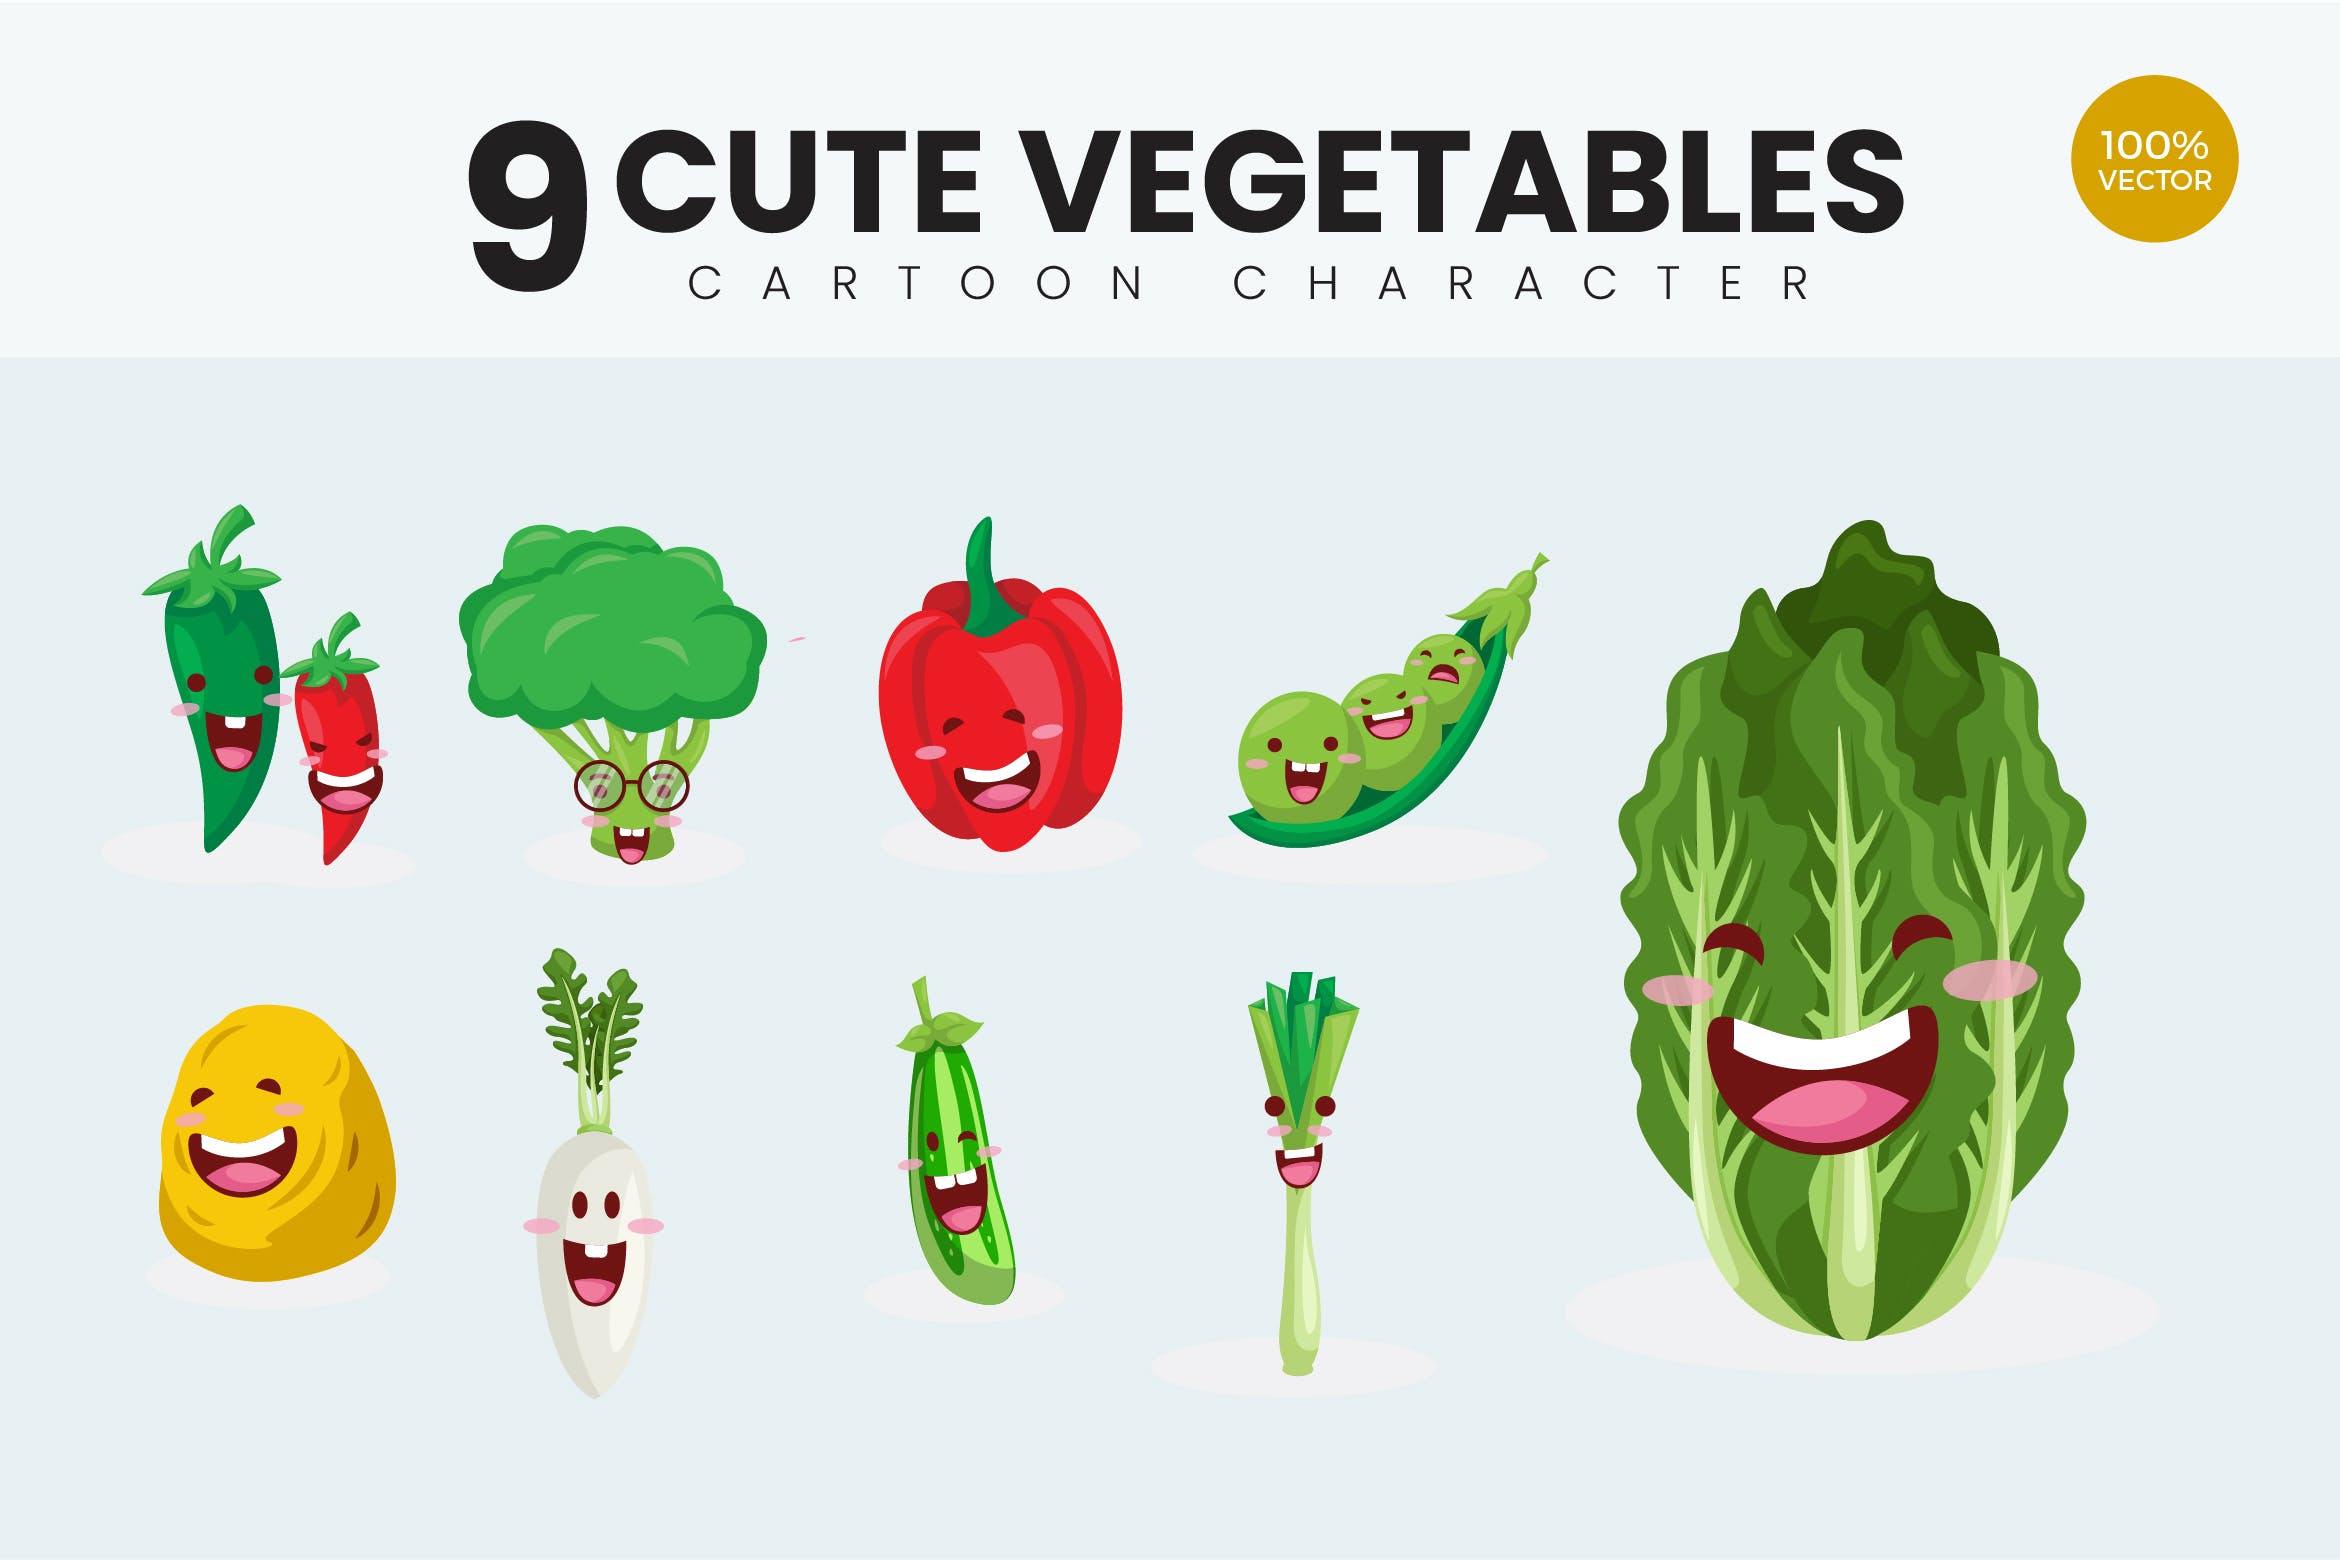 9个蔬菜可爱卡通形象矢量插画v2 9 Cute Vegetables Vector Illustration Vol.2插图